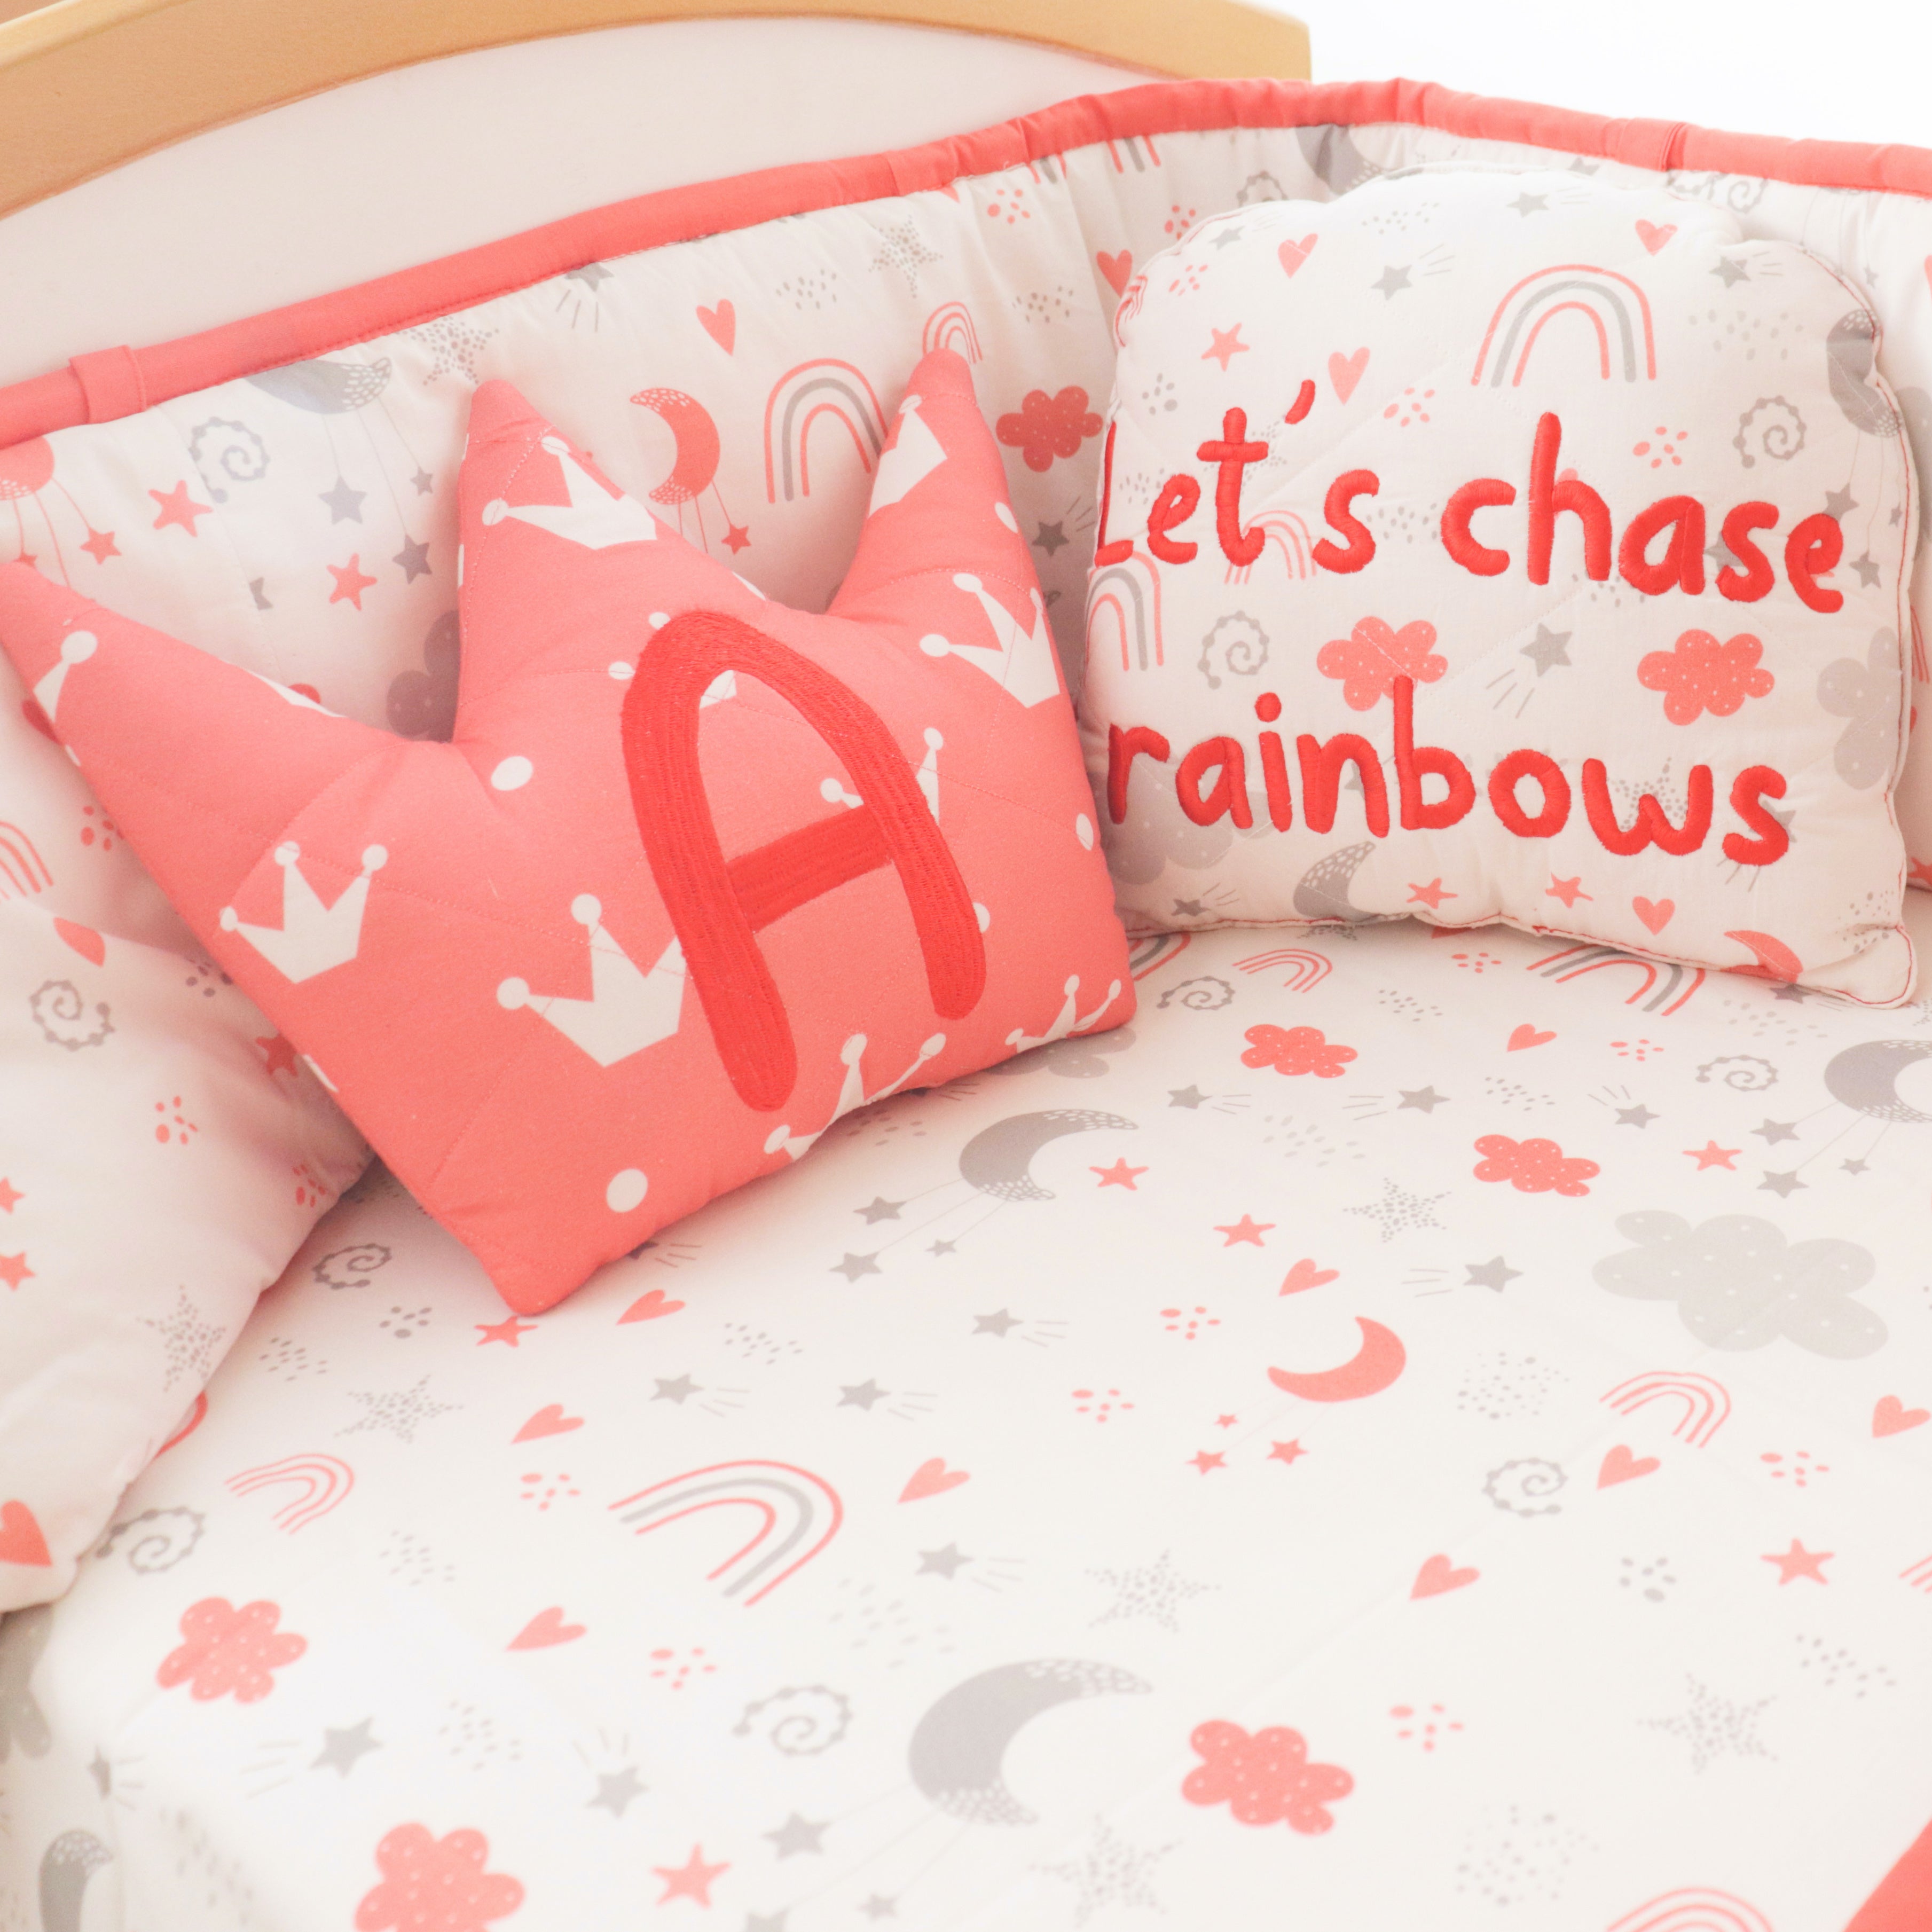 Let's Chase Rainbows - Throw Cushion